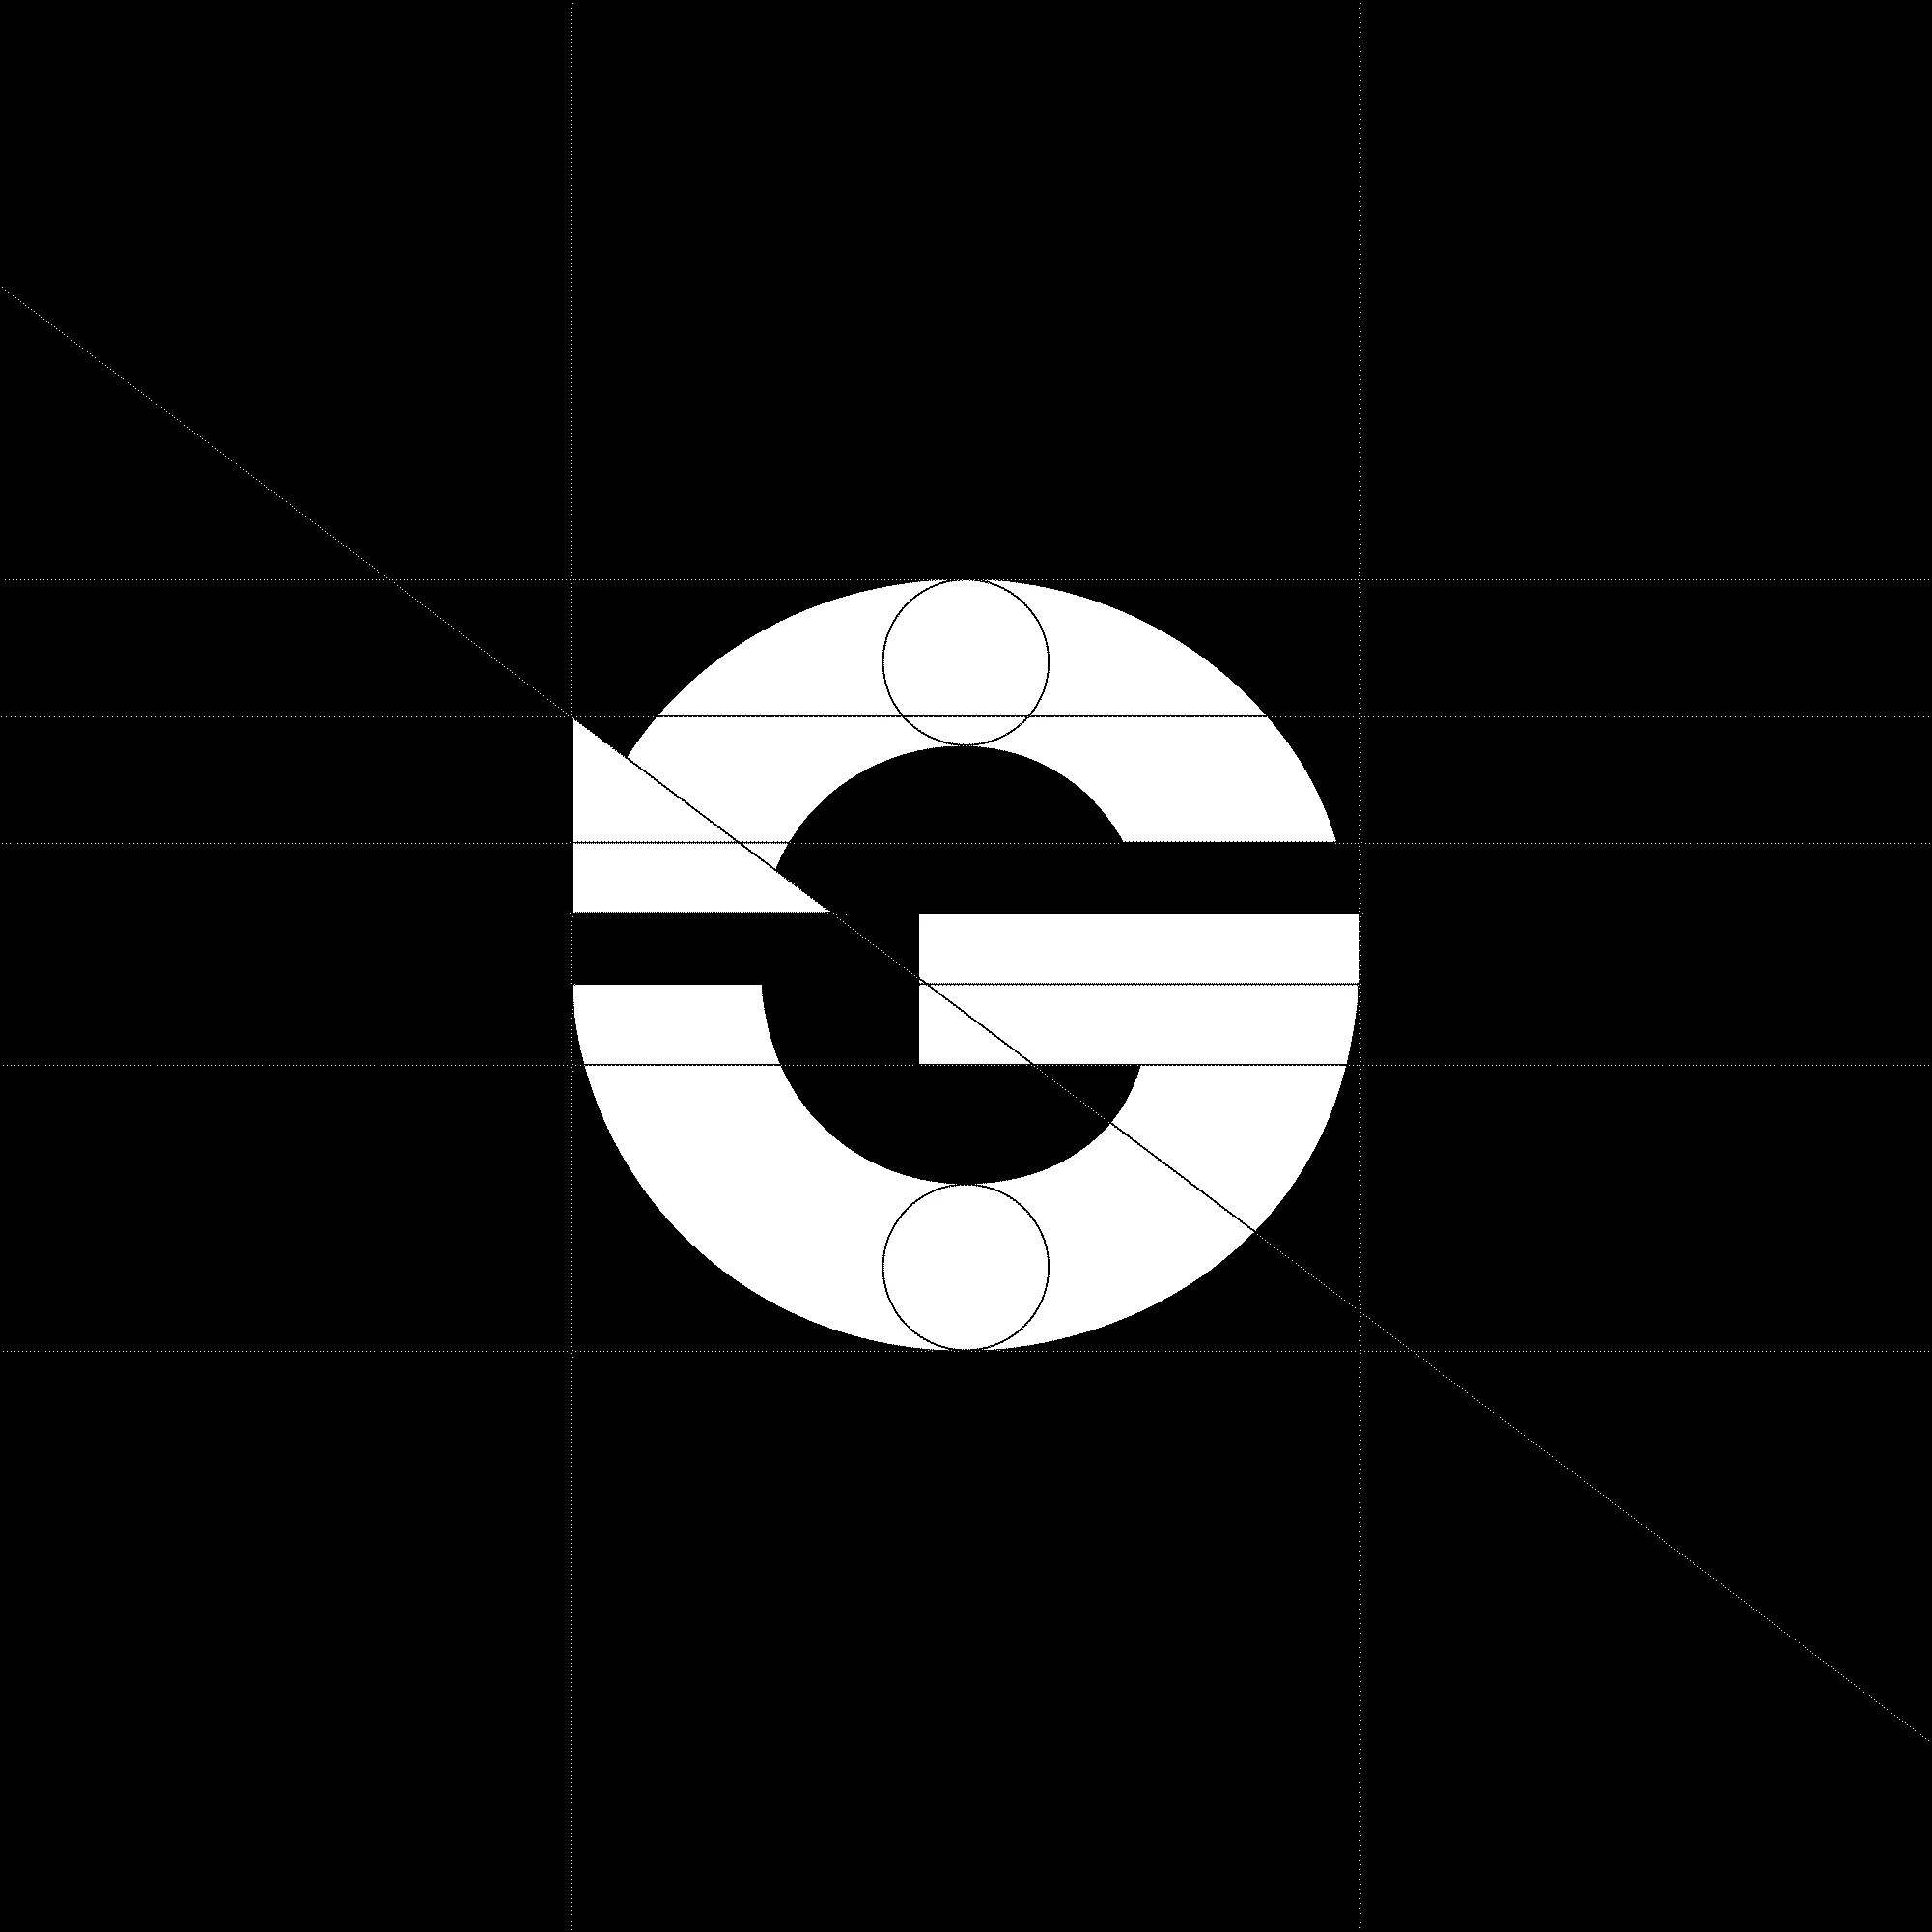 Branding logo design "G" with an arrow, grid